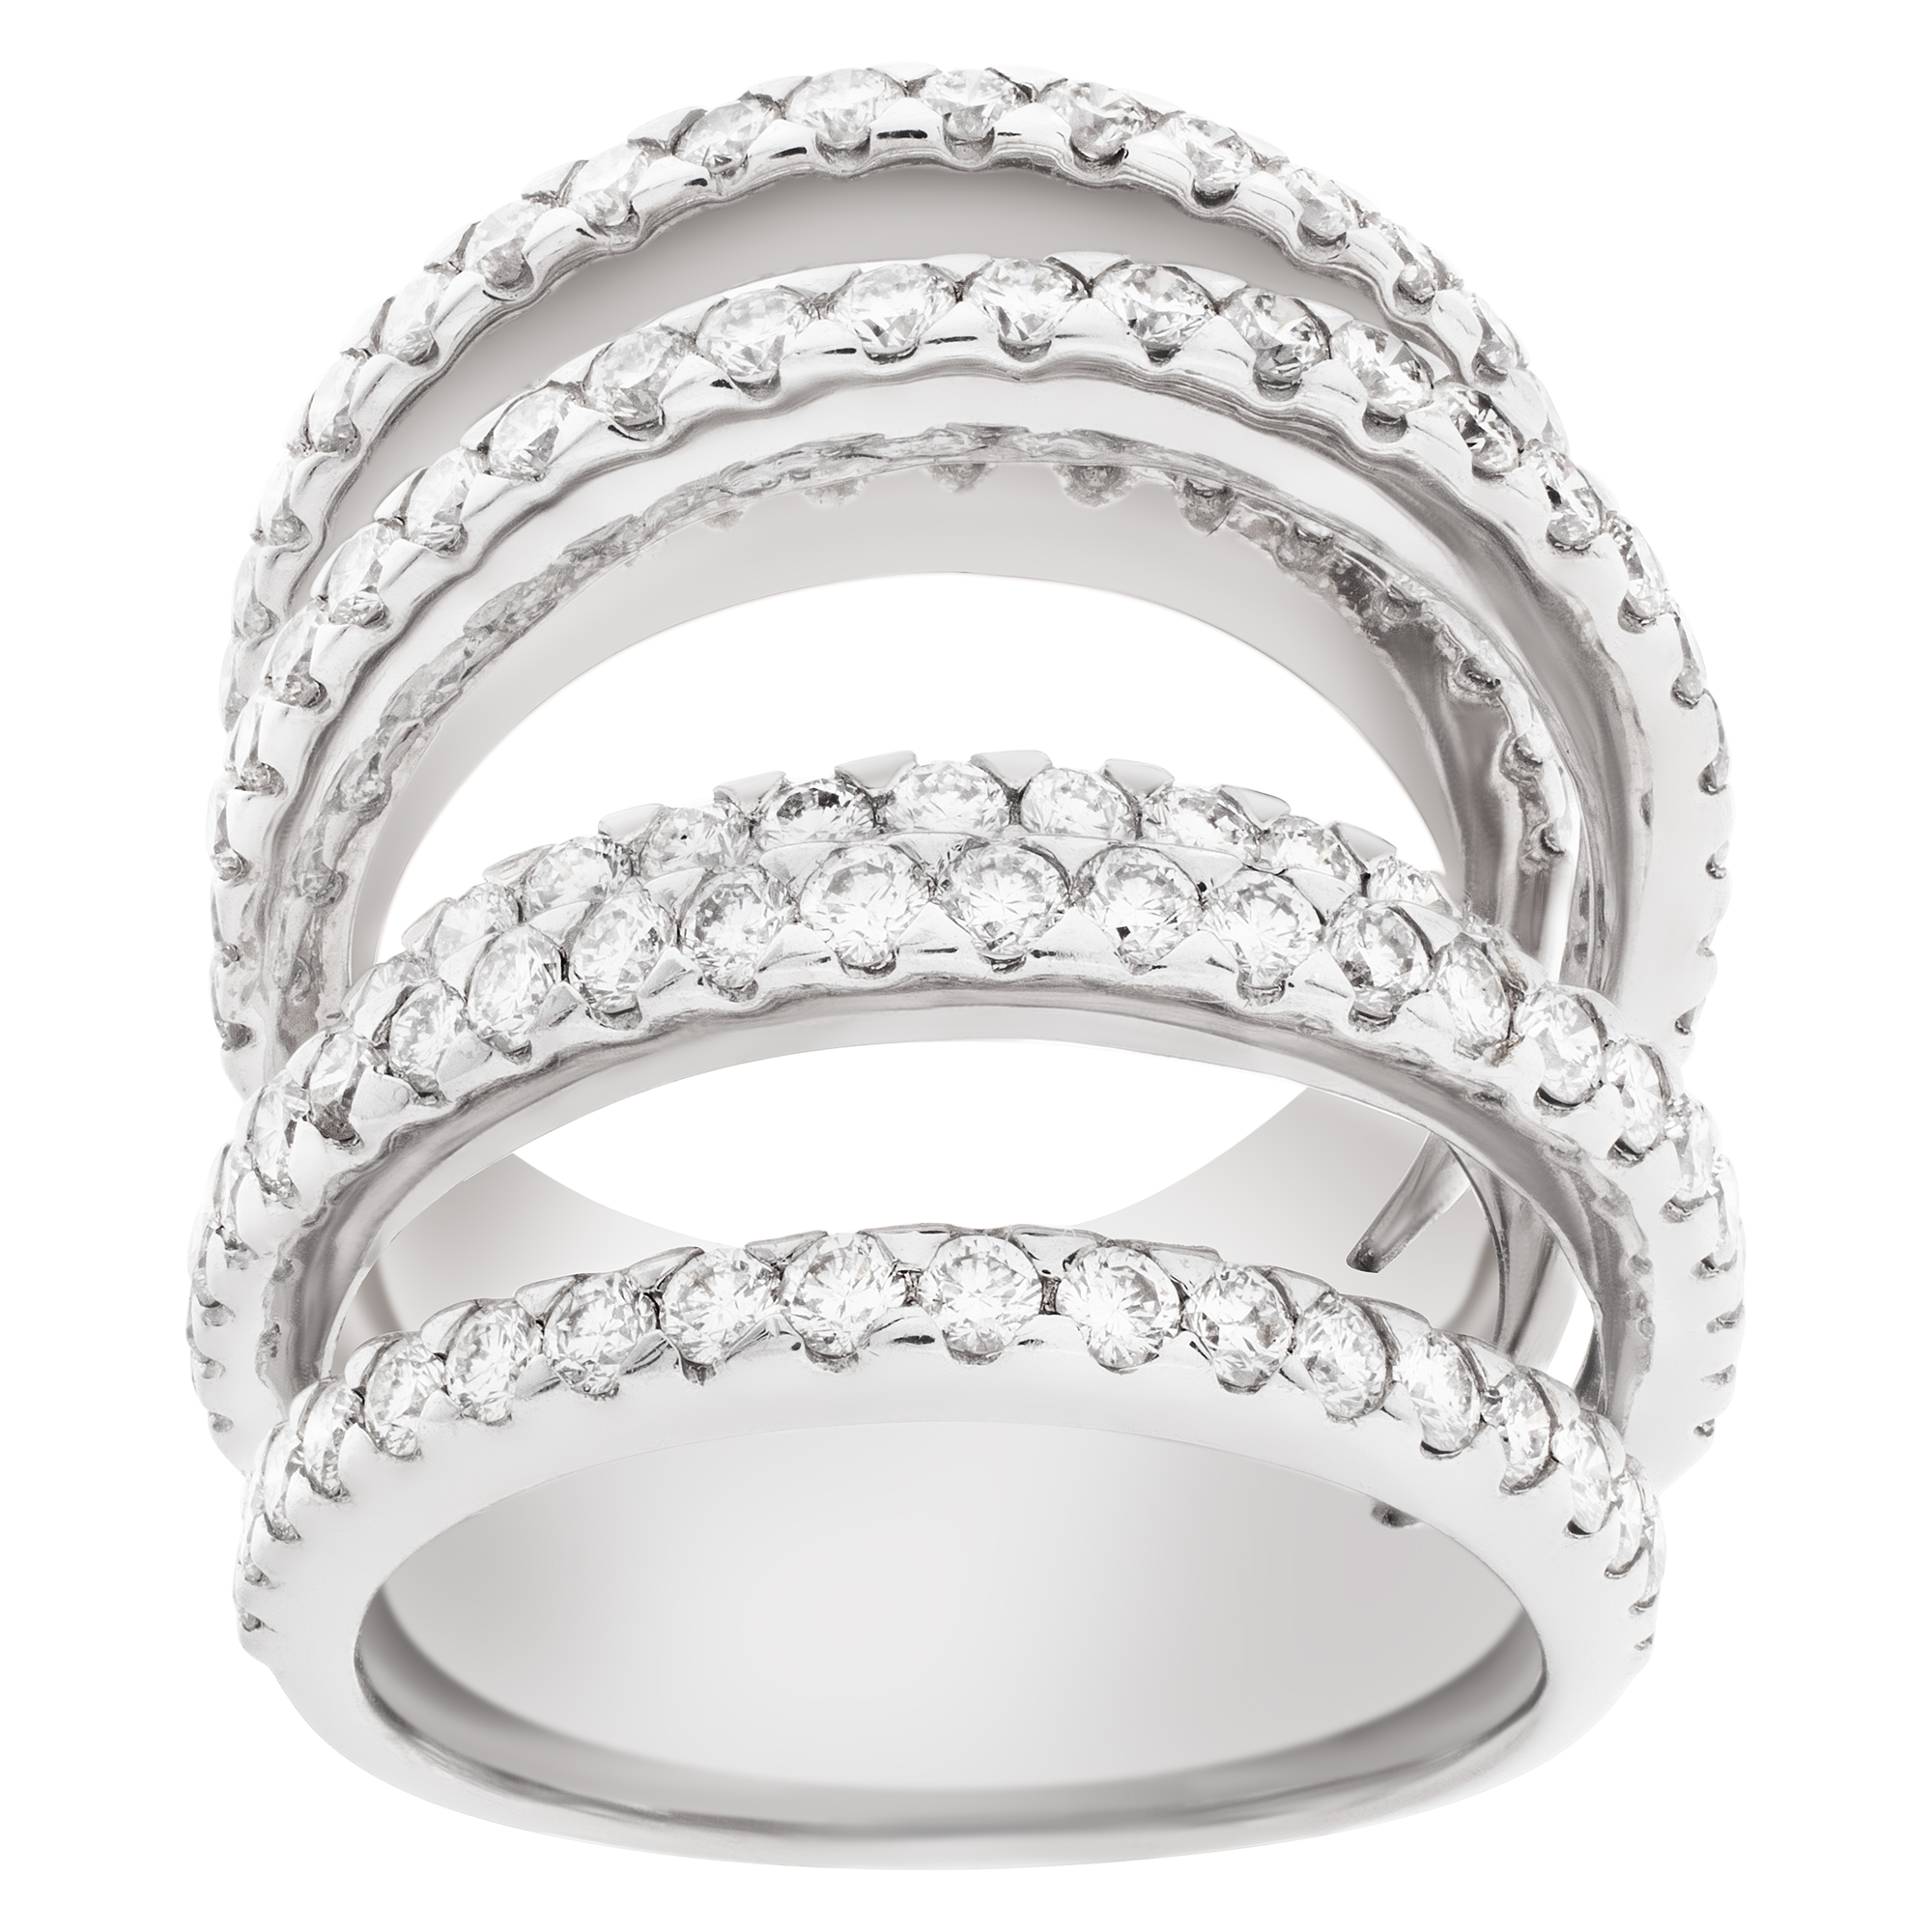 "Galaxy" pave diamond ring set in 18k white gold